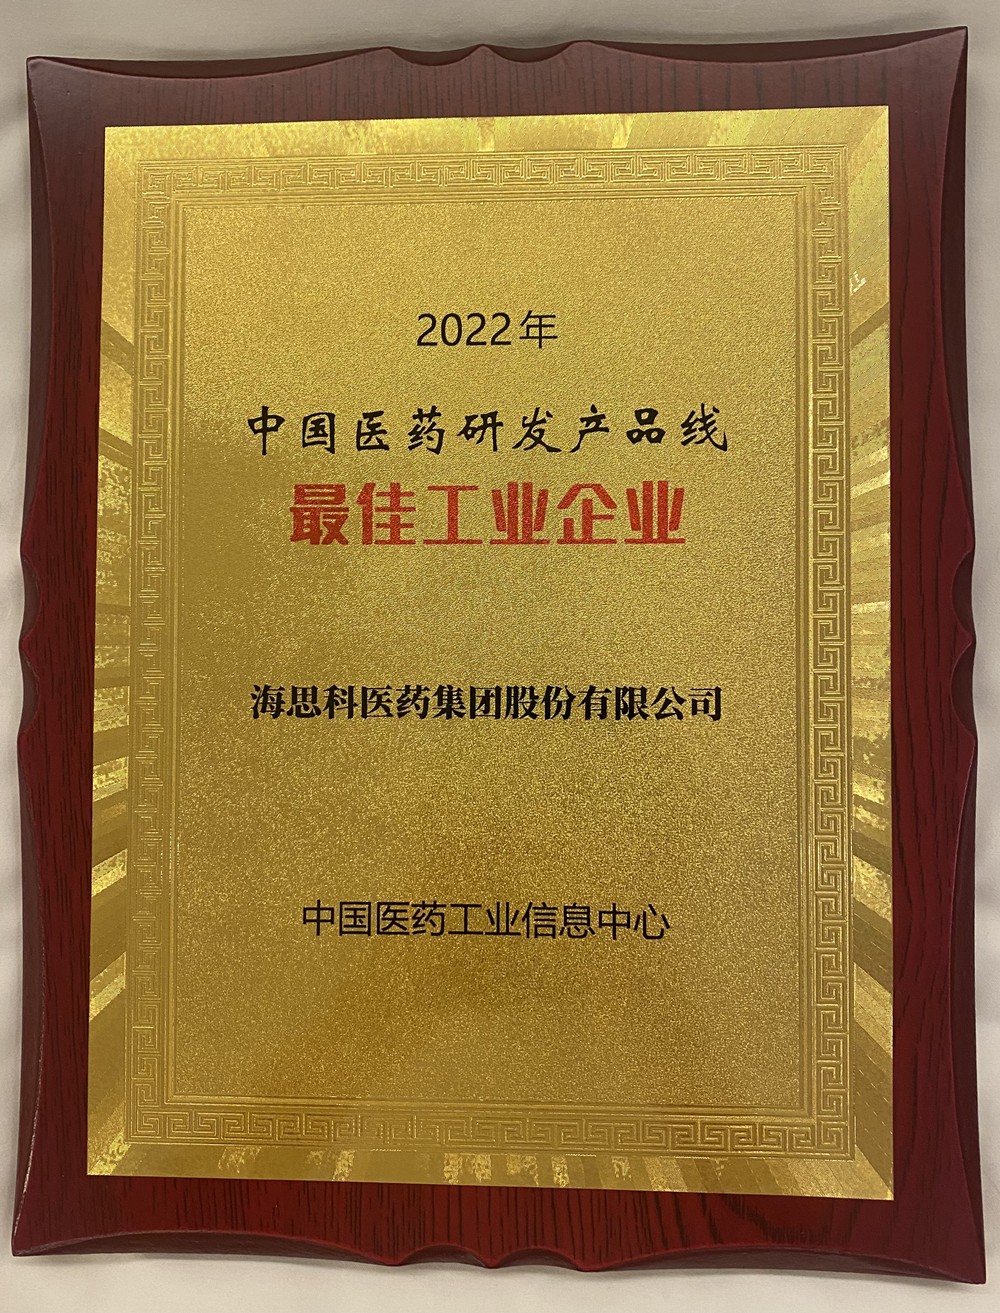 AG电投厅荣获中国医药研发产品线最佳工业企业